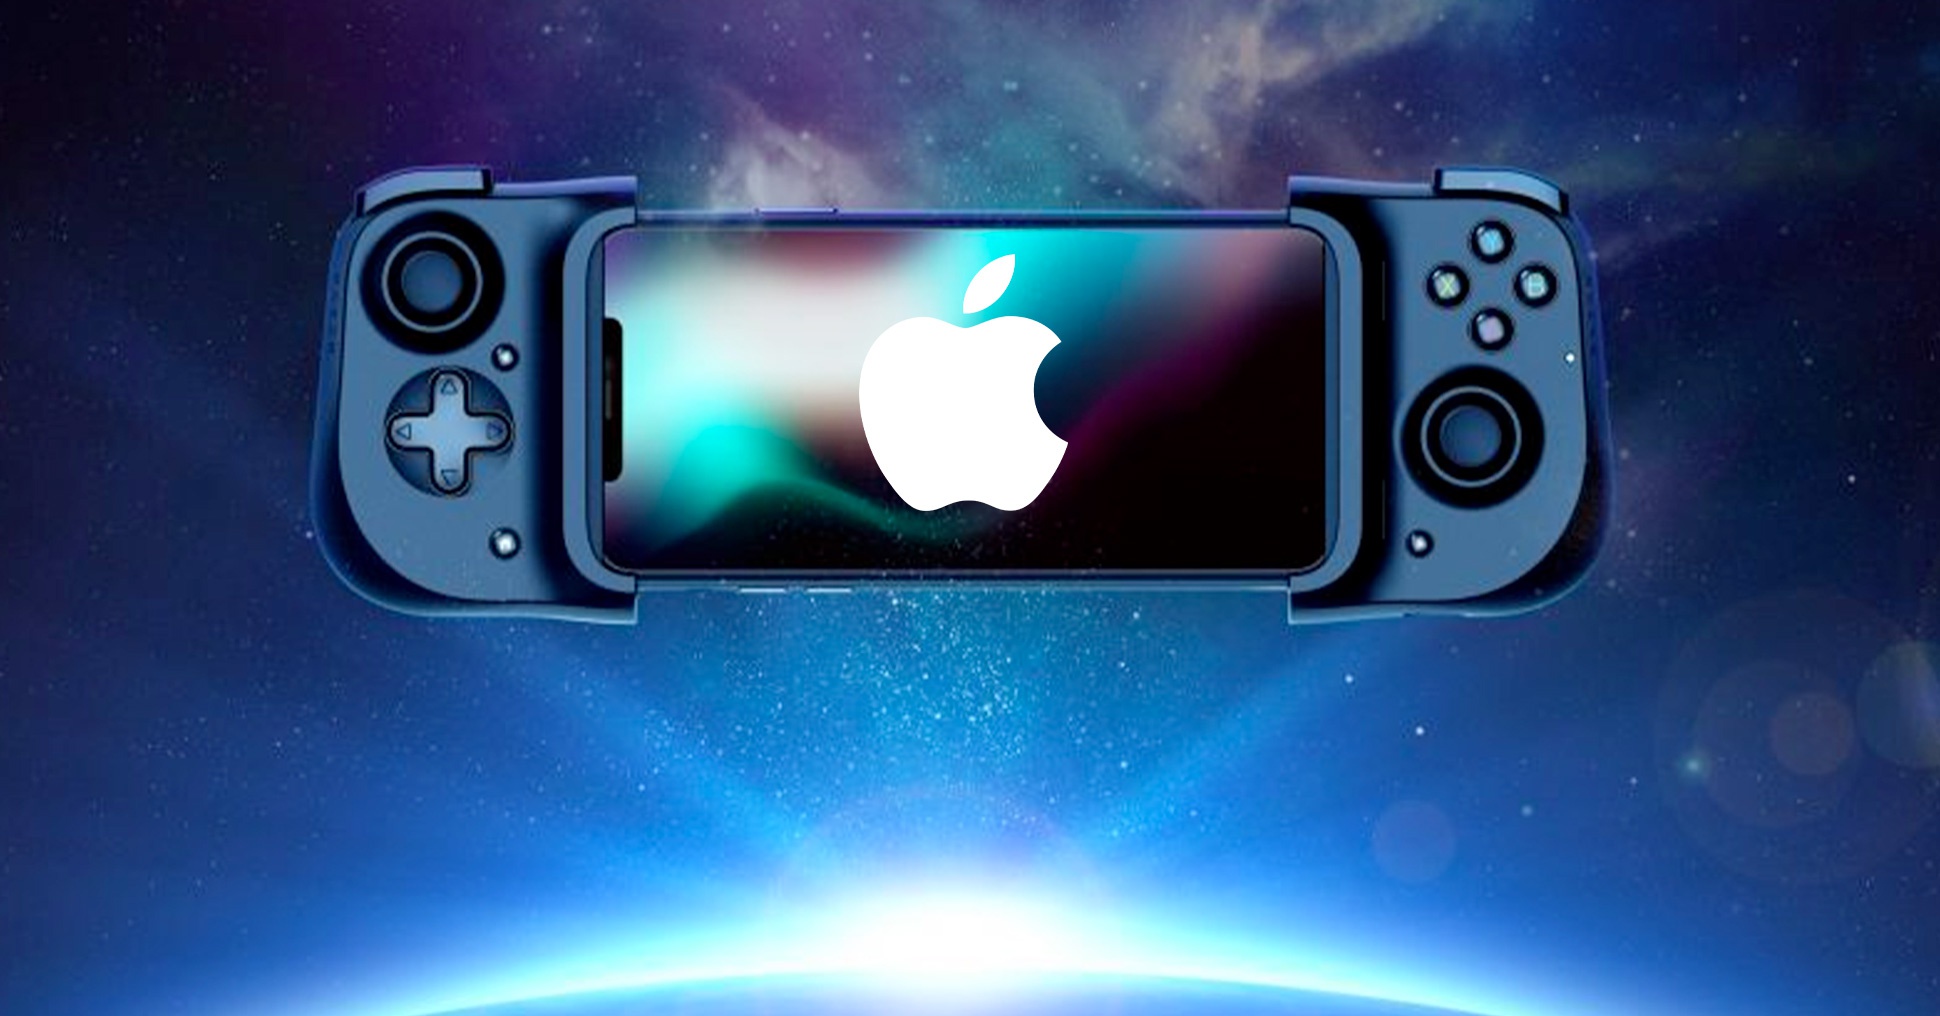 Baik Stadia, GeForce SEKARANG, maupun Shadow: Apple tidak ingin streaming game di iPhone